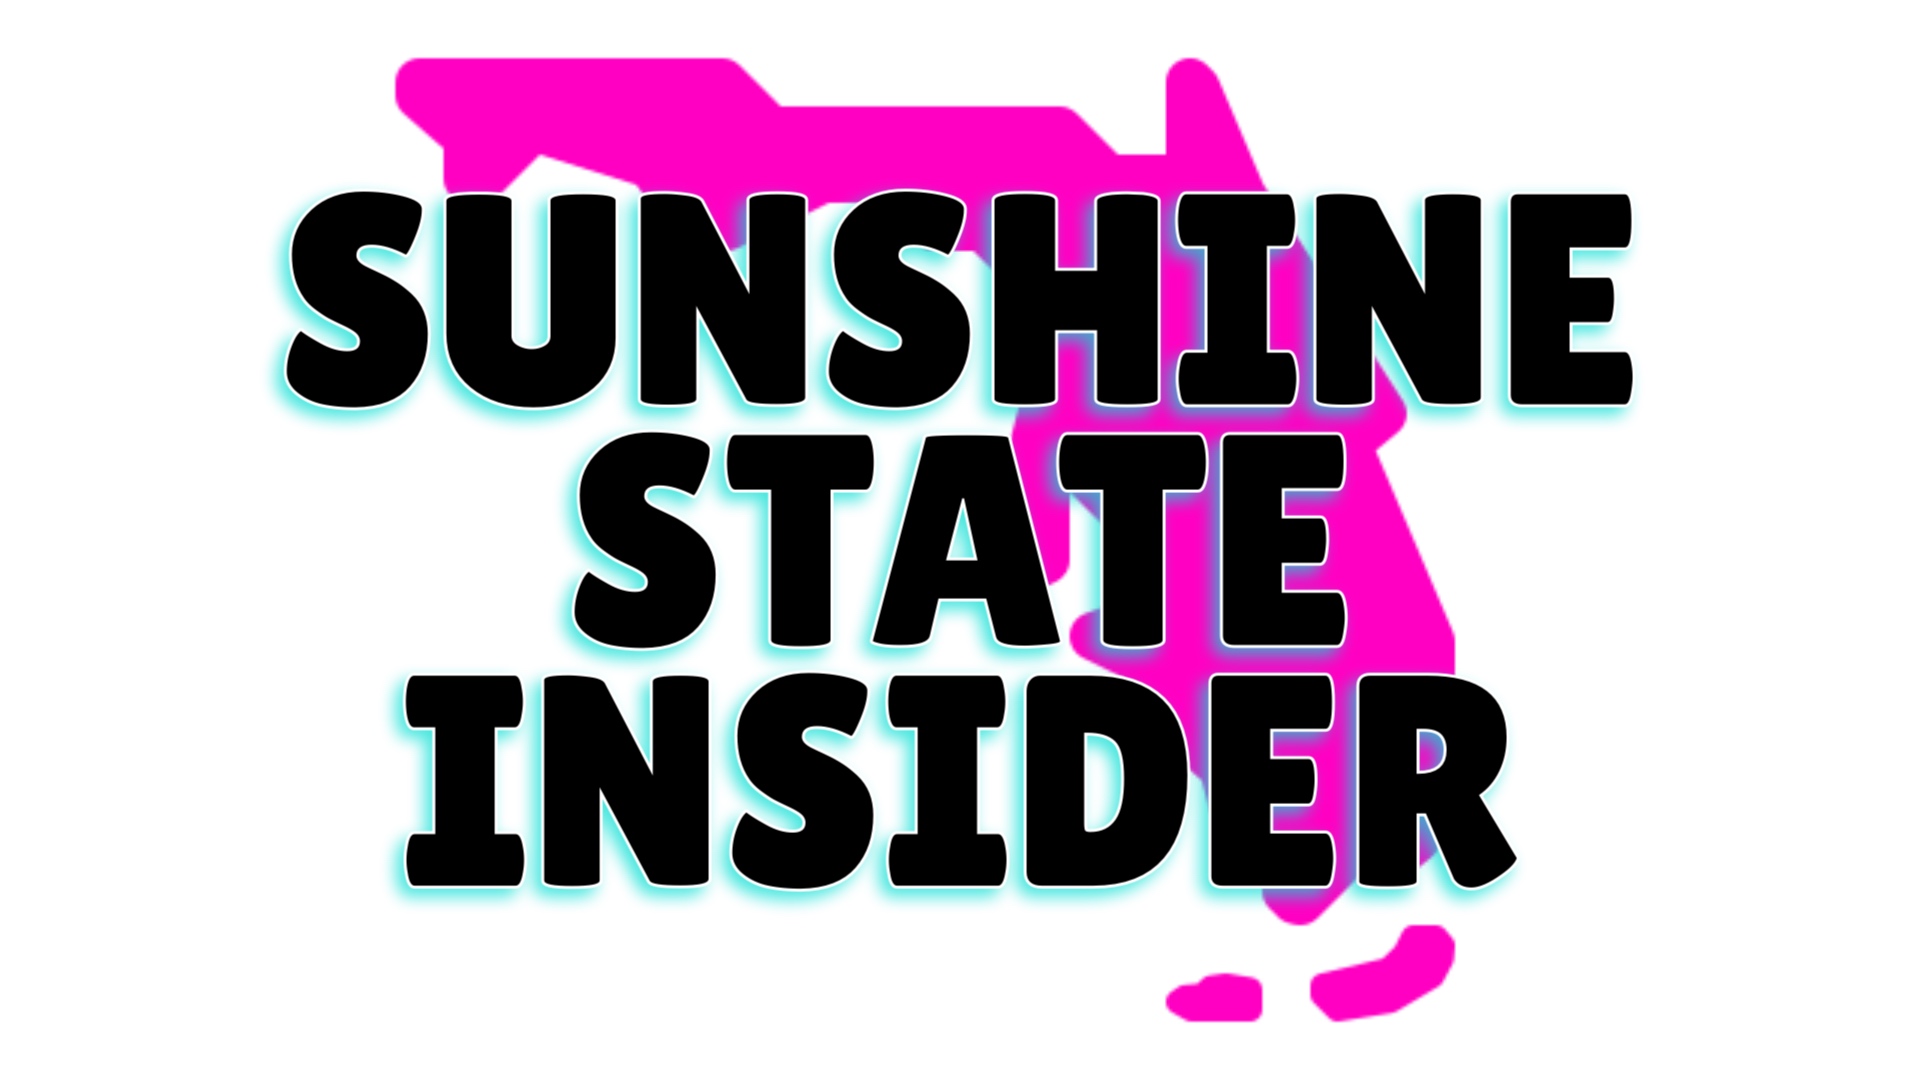 Sunshine State Insider